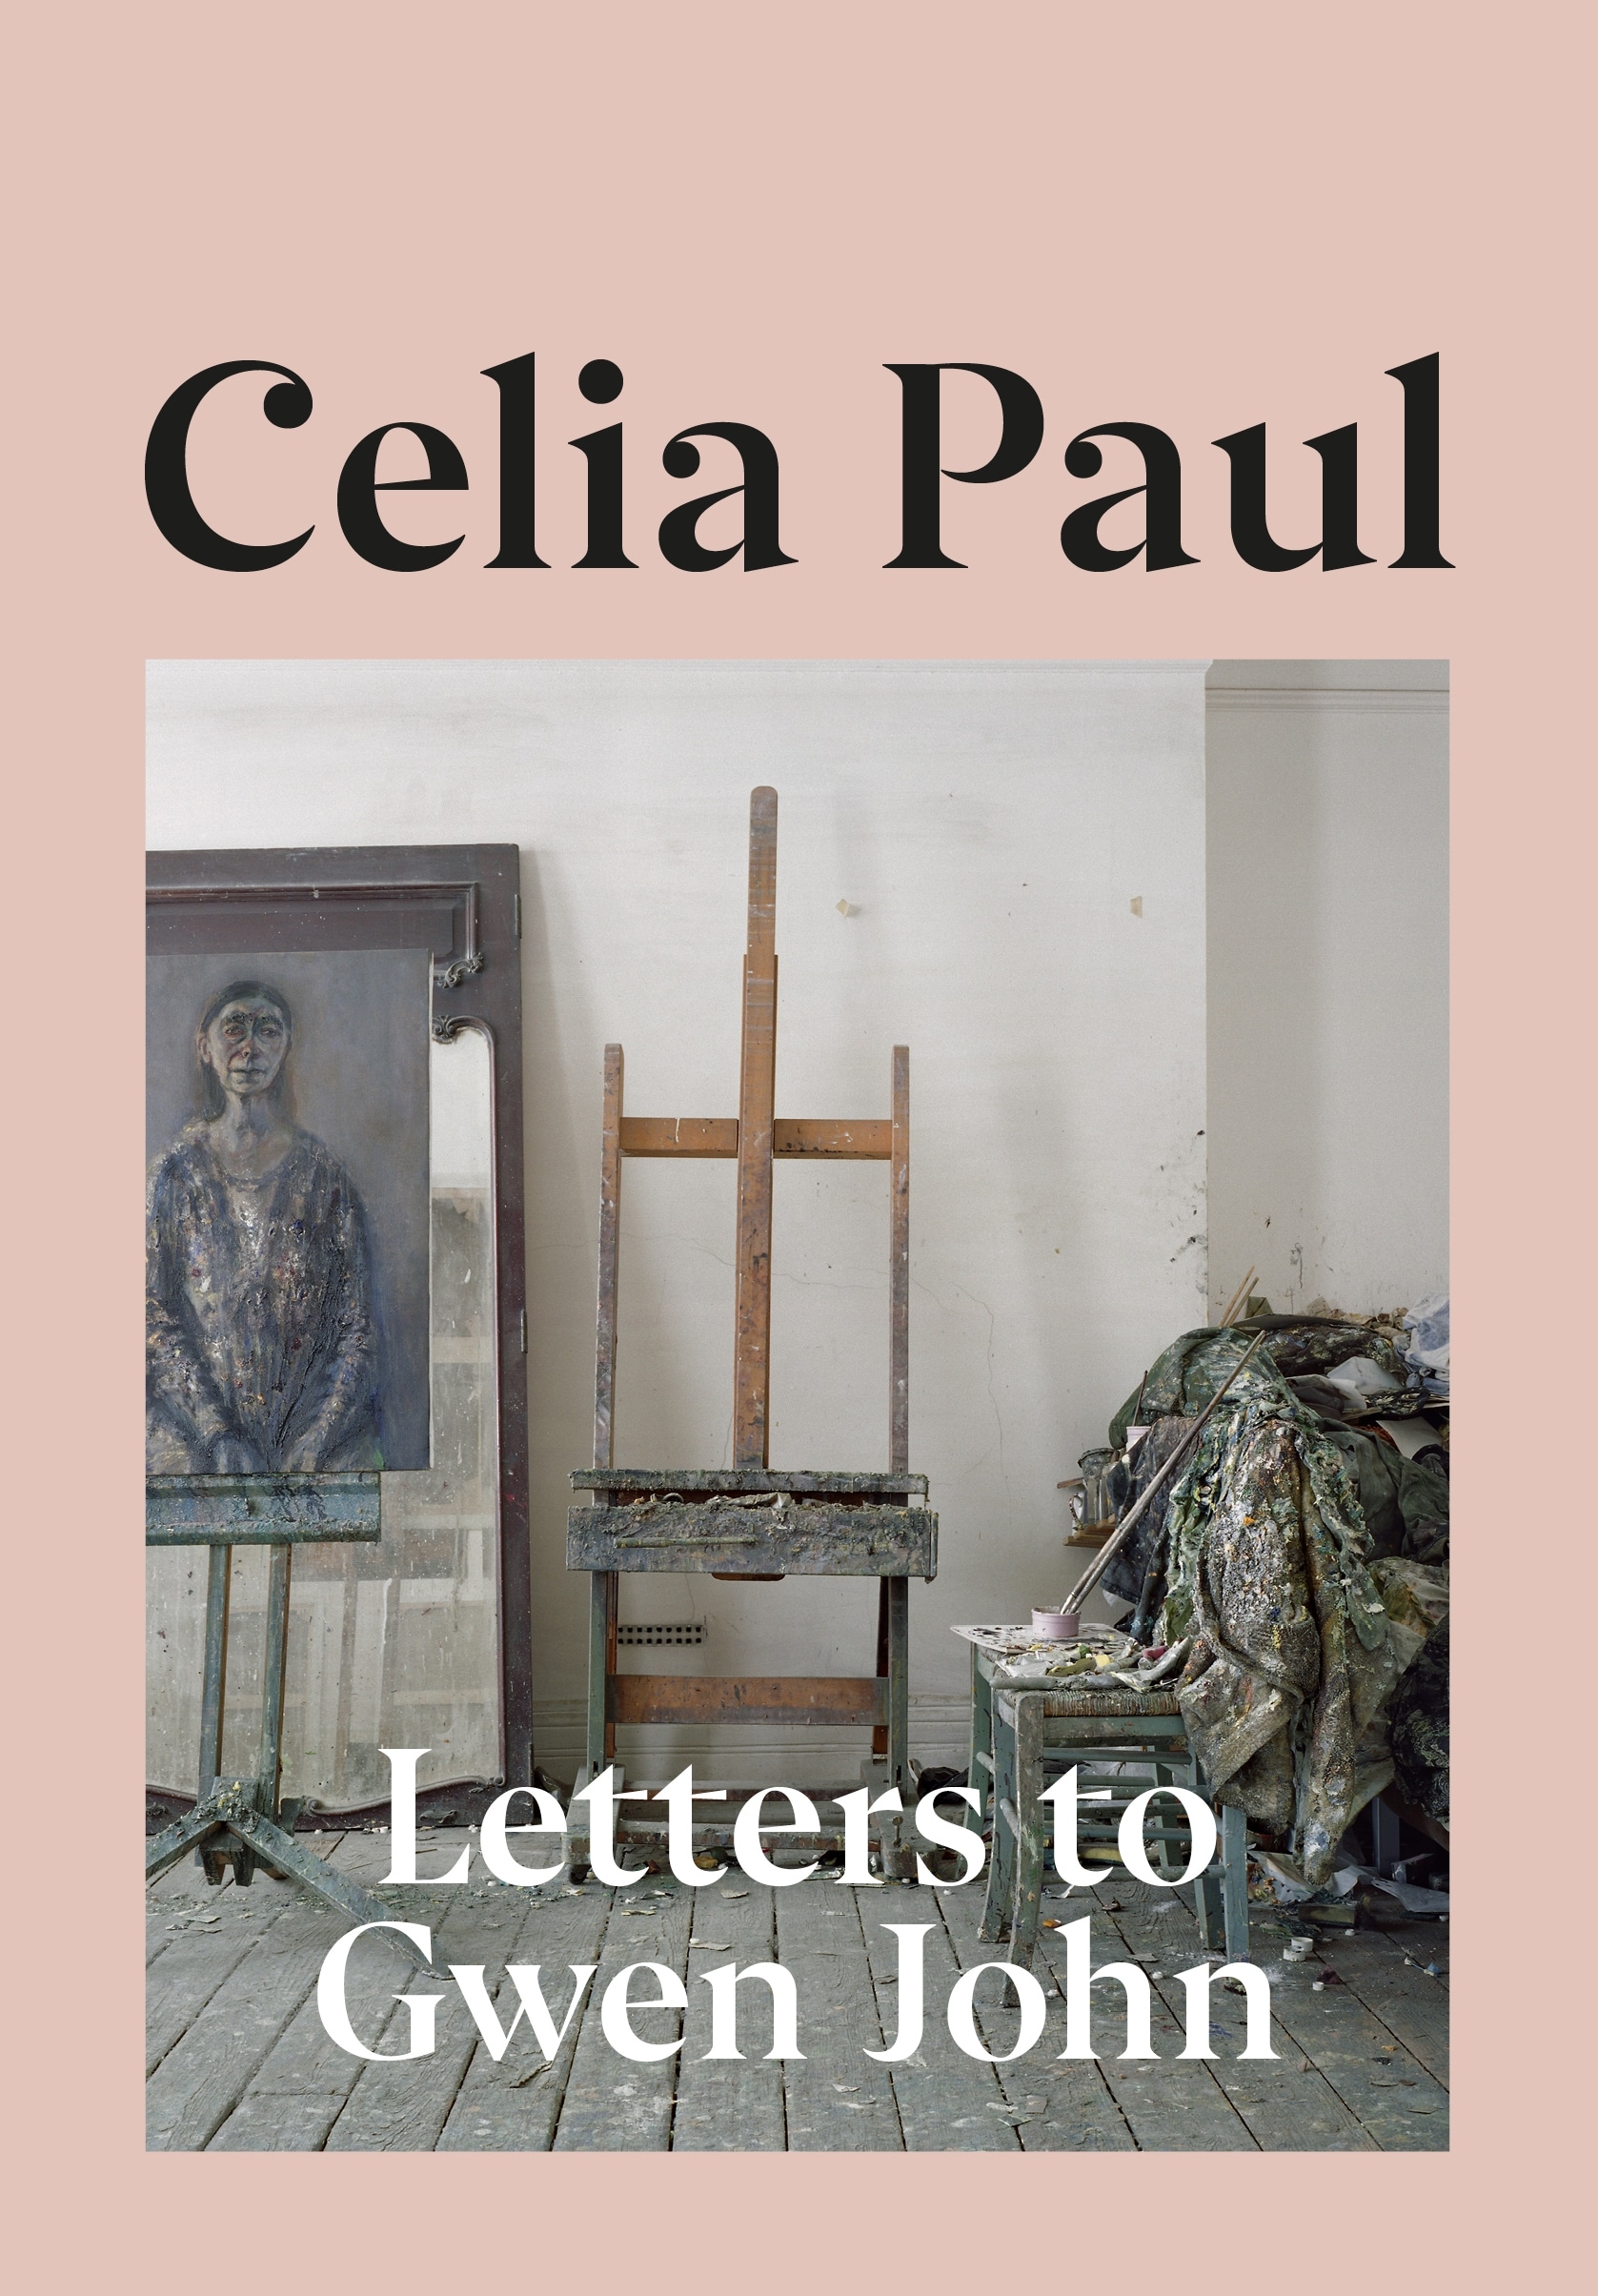 Book “Letters to Gwen John” by Celia Paul — April 7, 2022